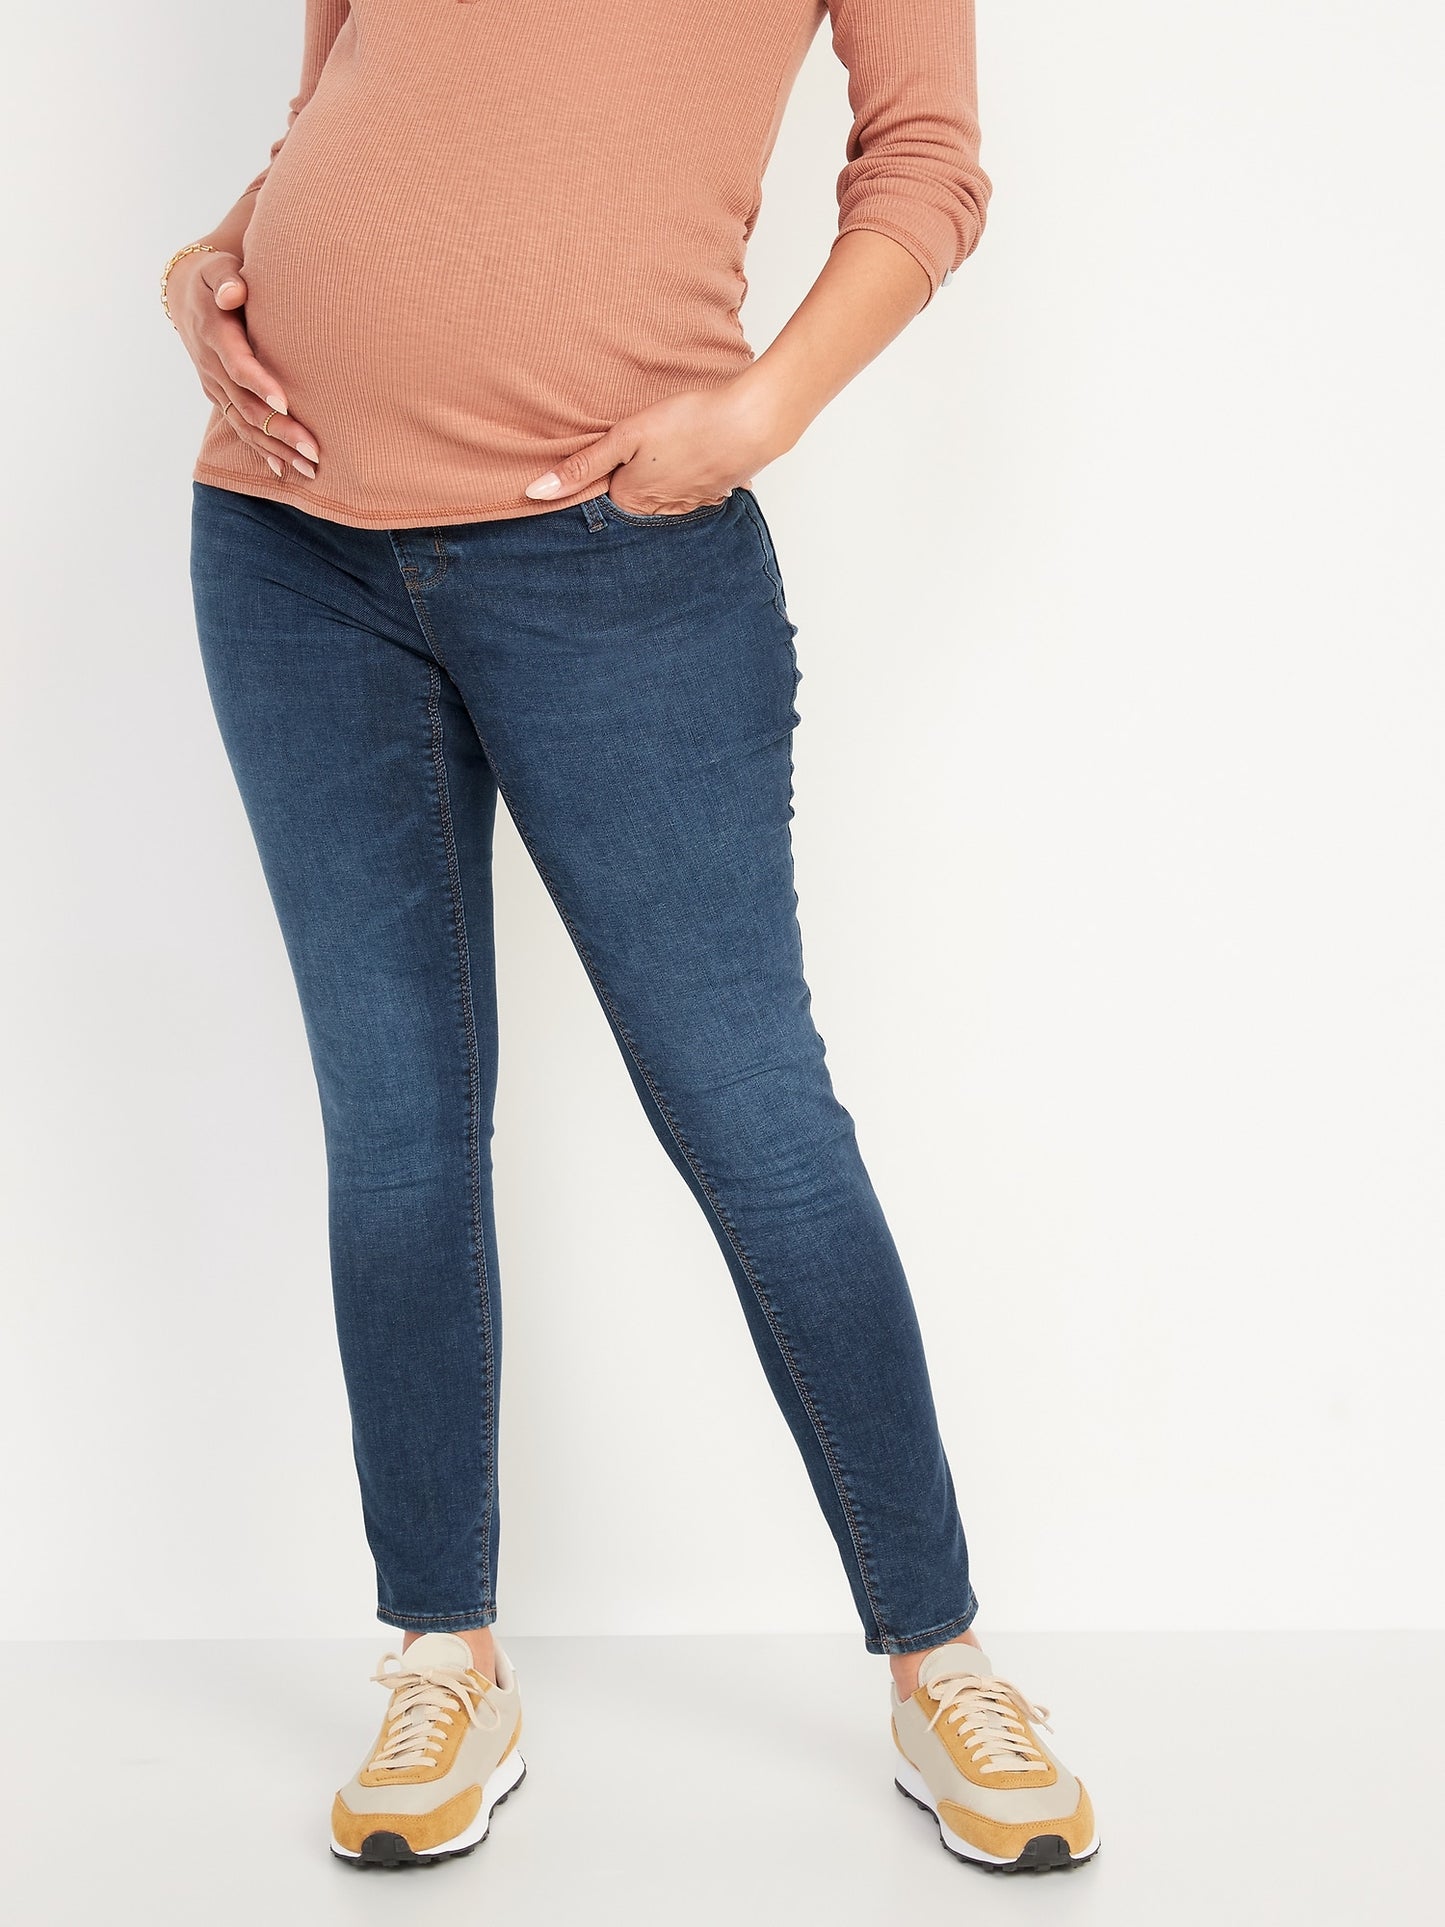 Maternity Premium Full Panel Rockstar Super Skinny Jeans